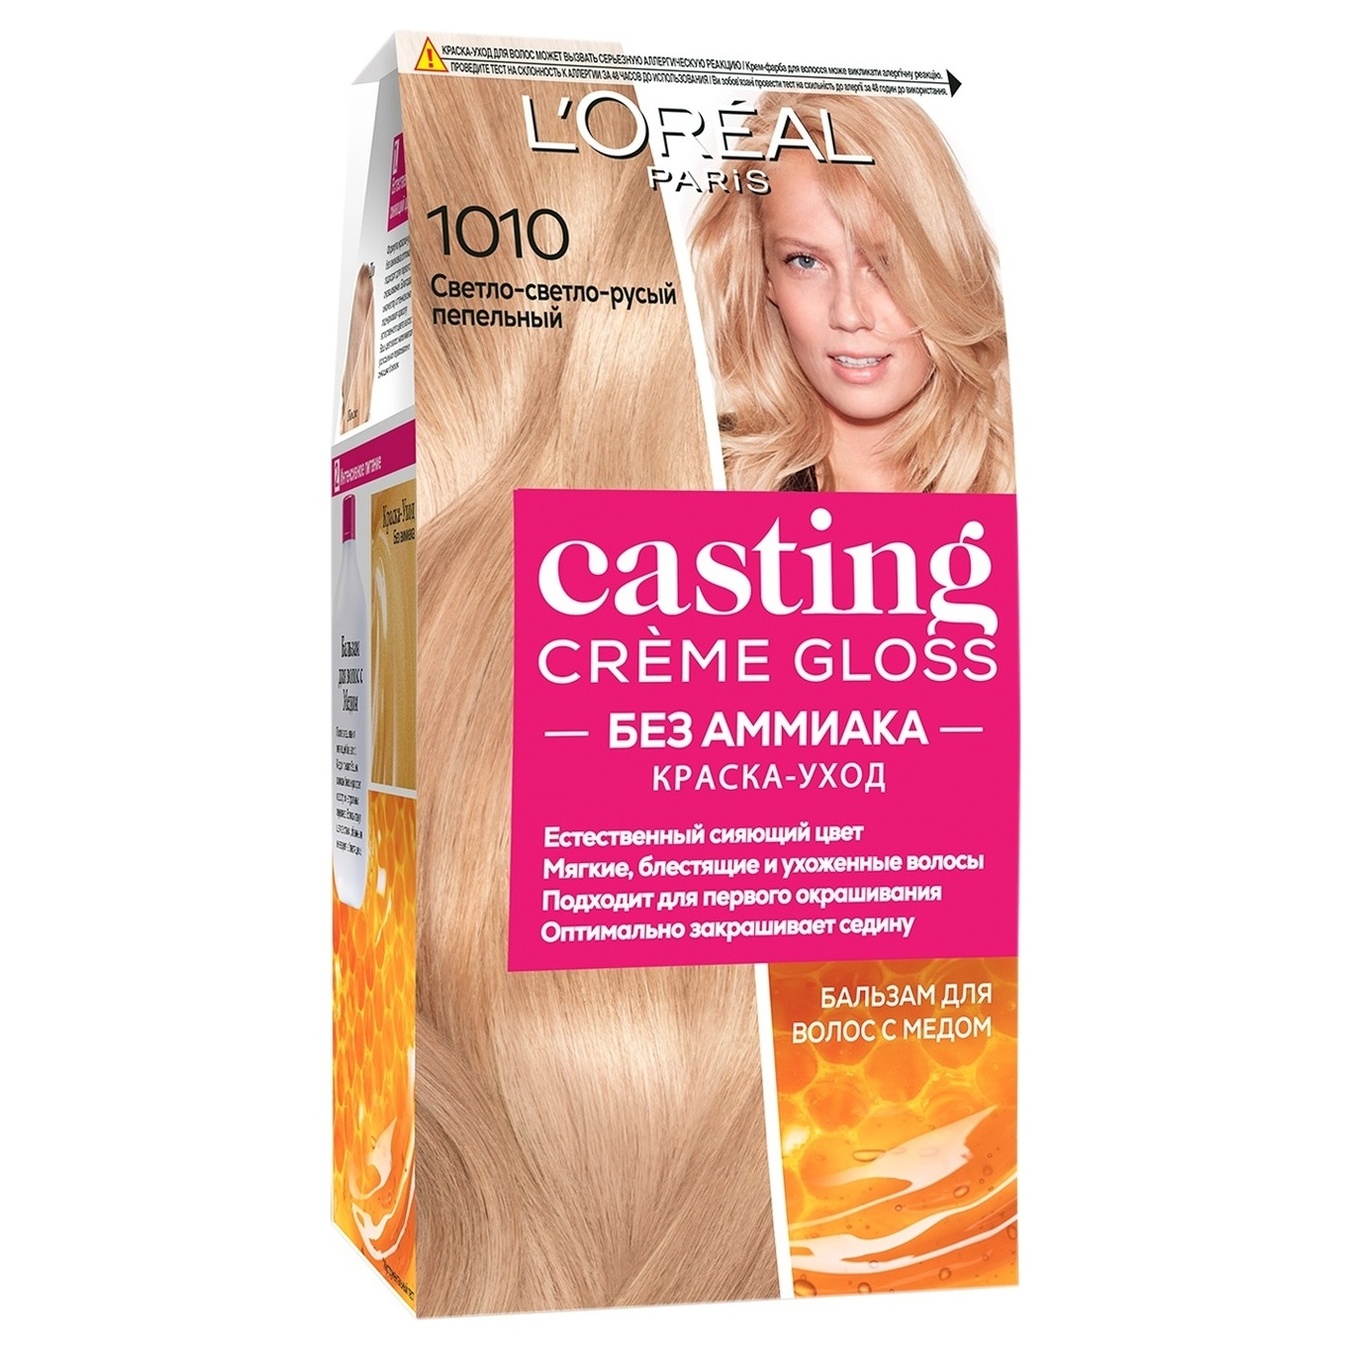 Краска Loreal Casting Creme Gloss для волос оттенок 1010